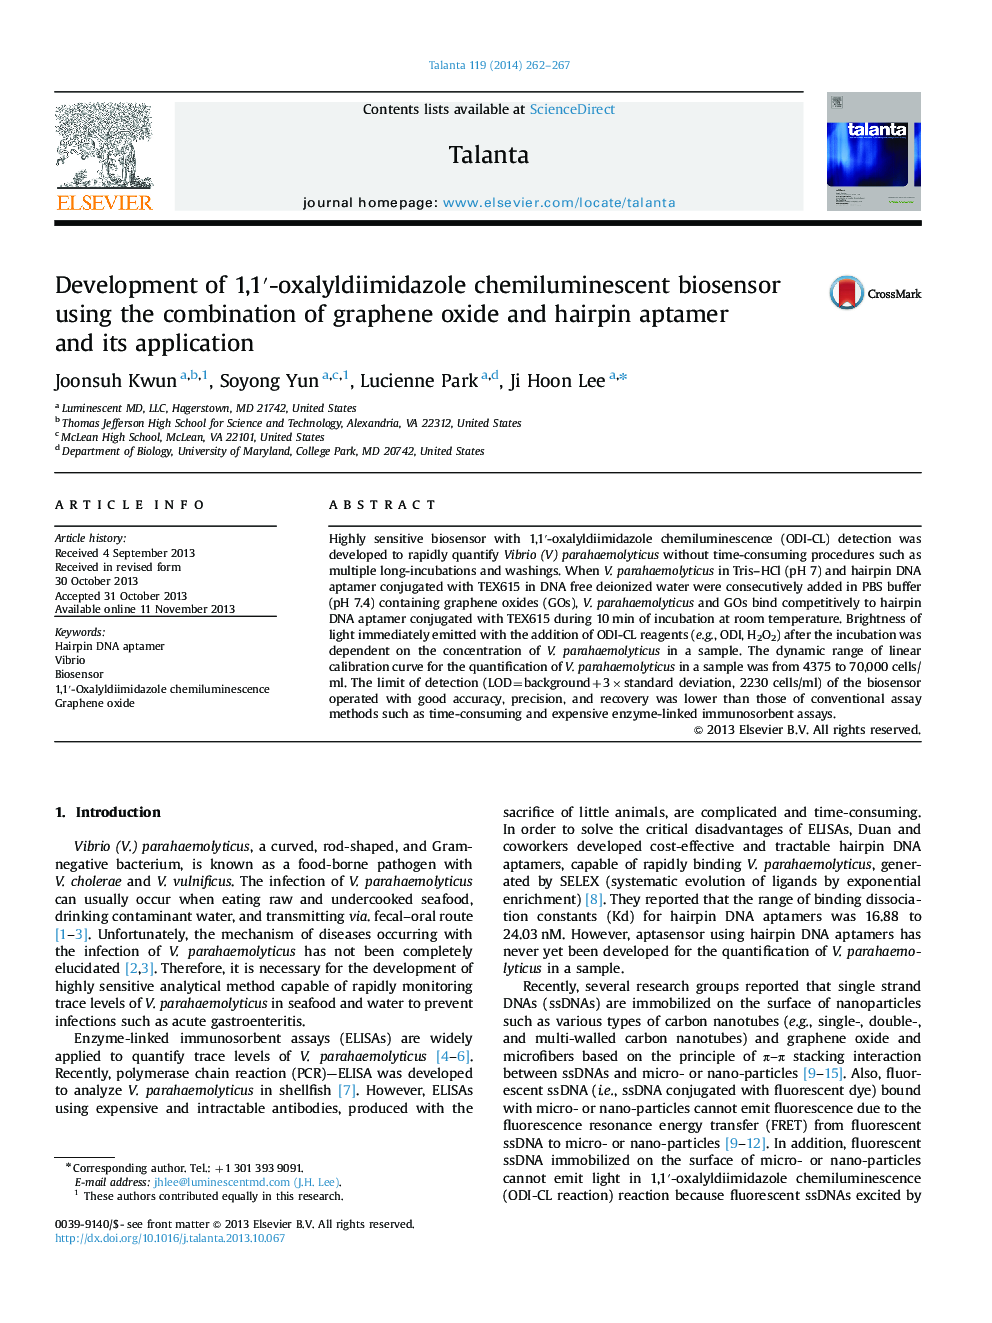 Development of 1,1â²-oxalyldiimidazole chemiluminescent biosensor using the combination of graphene oxide and hairpin aptamer and its application